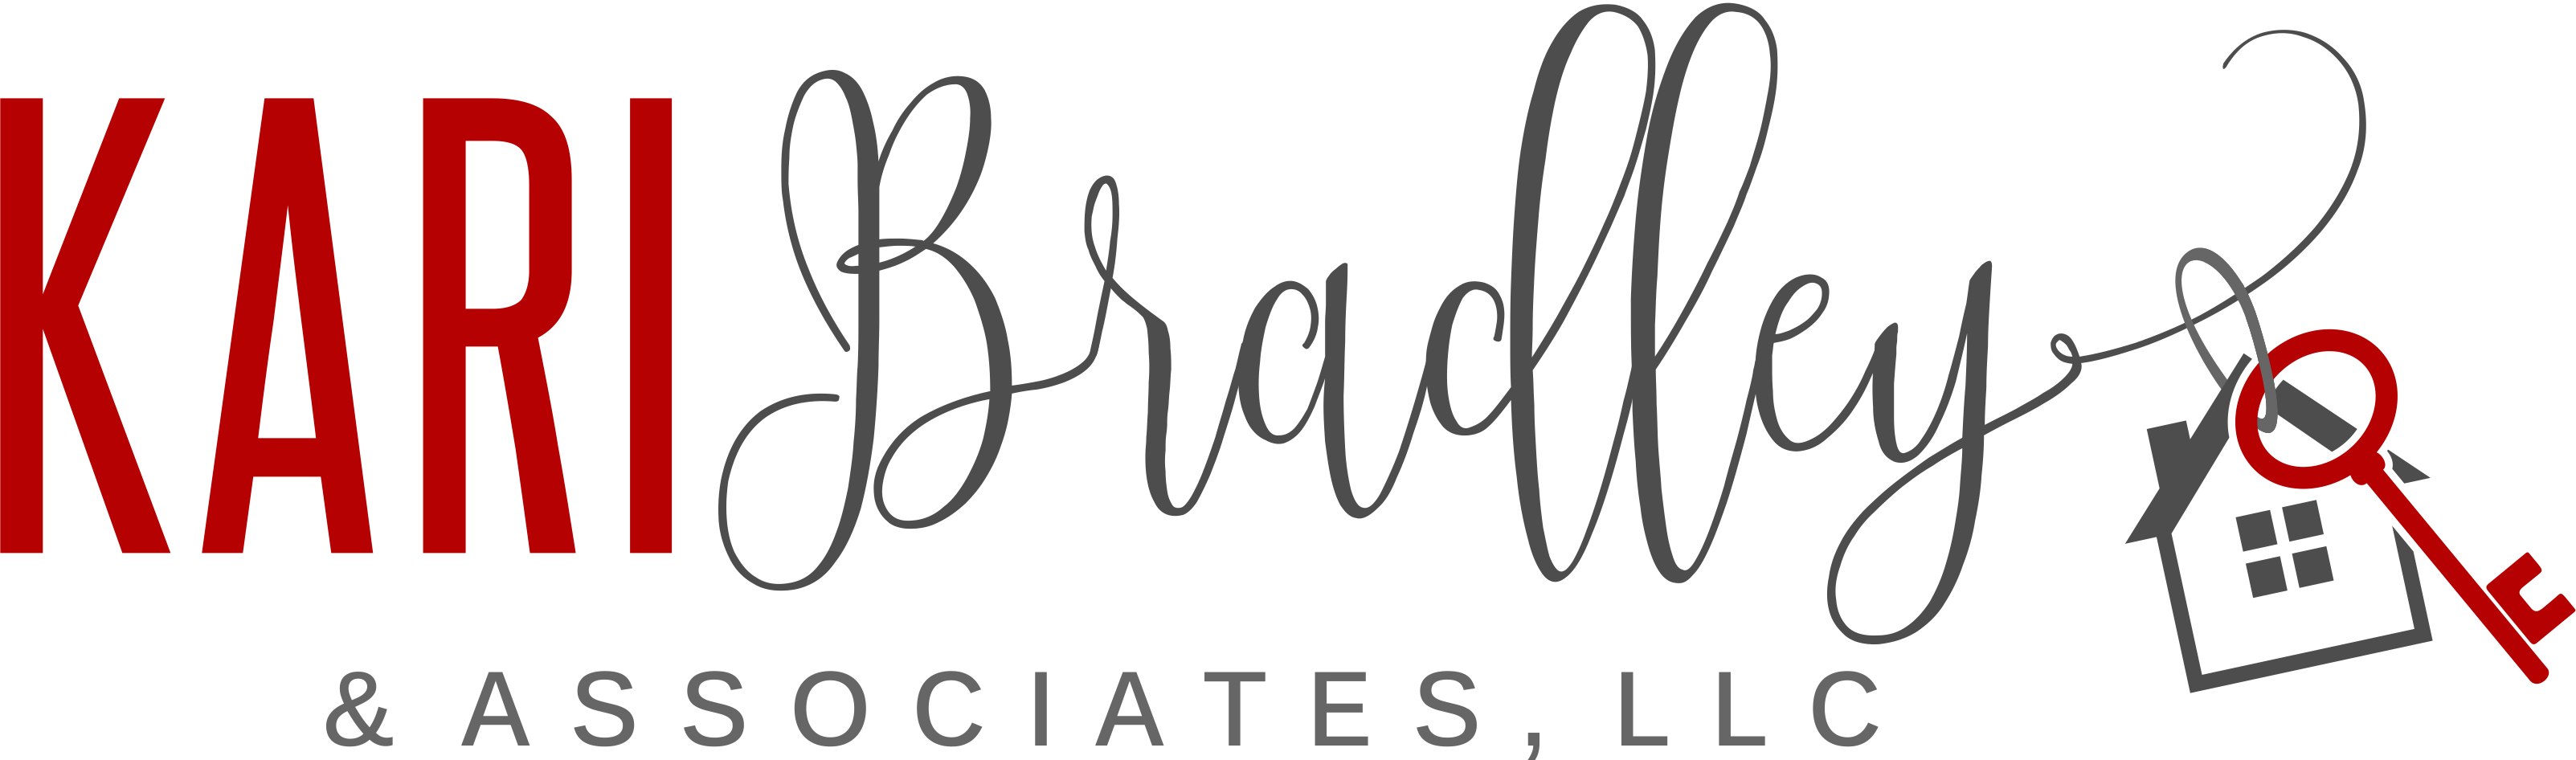 Kari Bradley and Associates, LLC